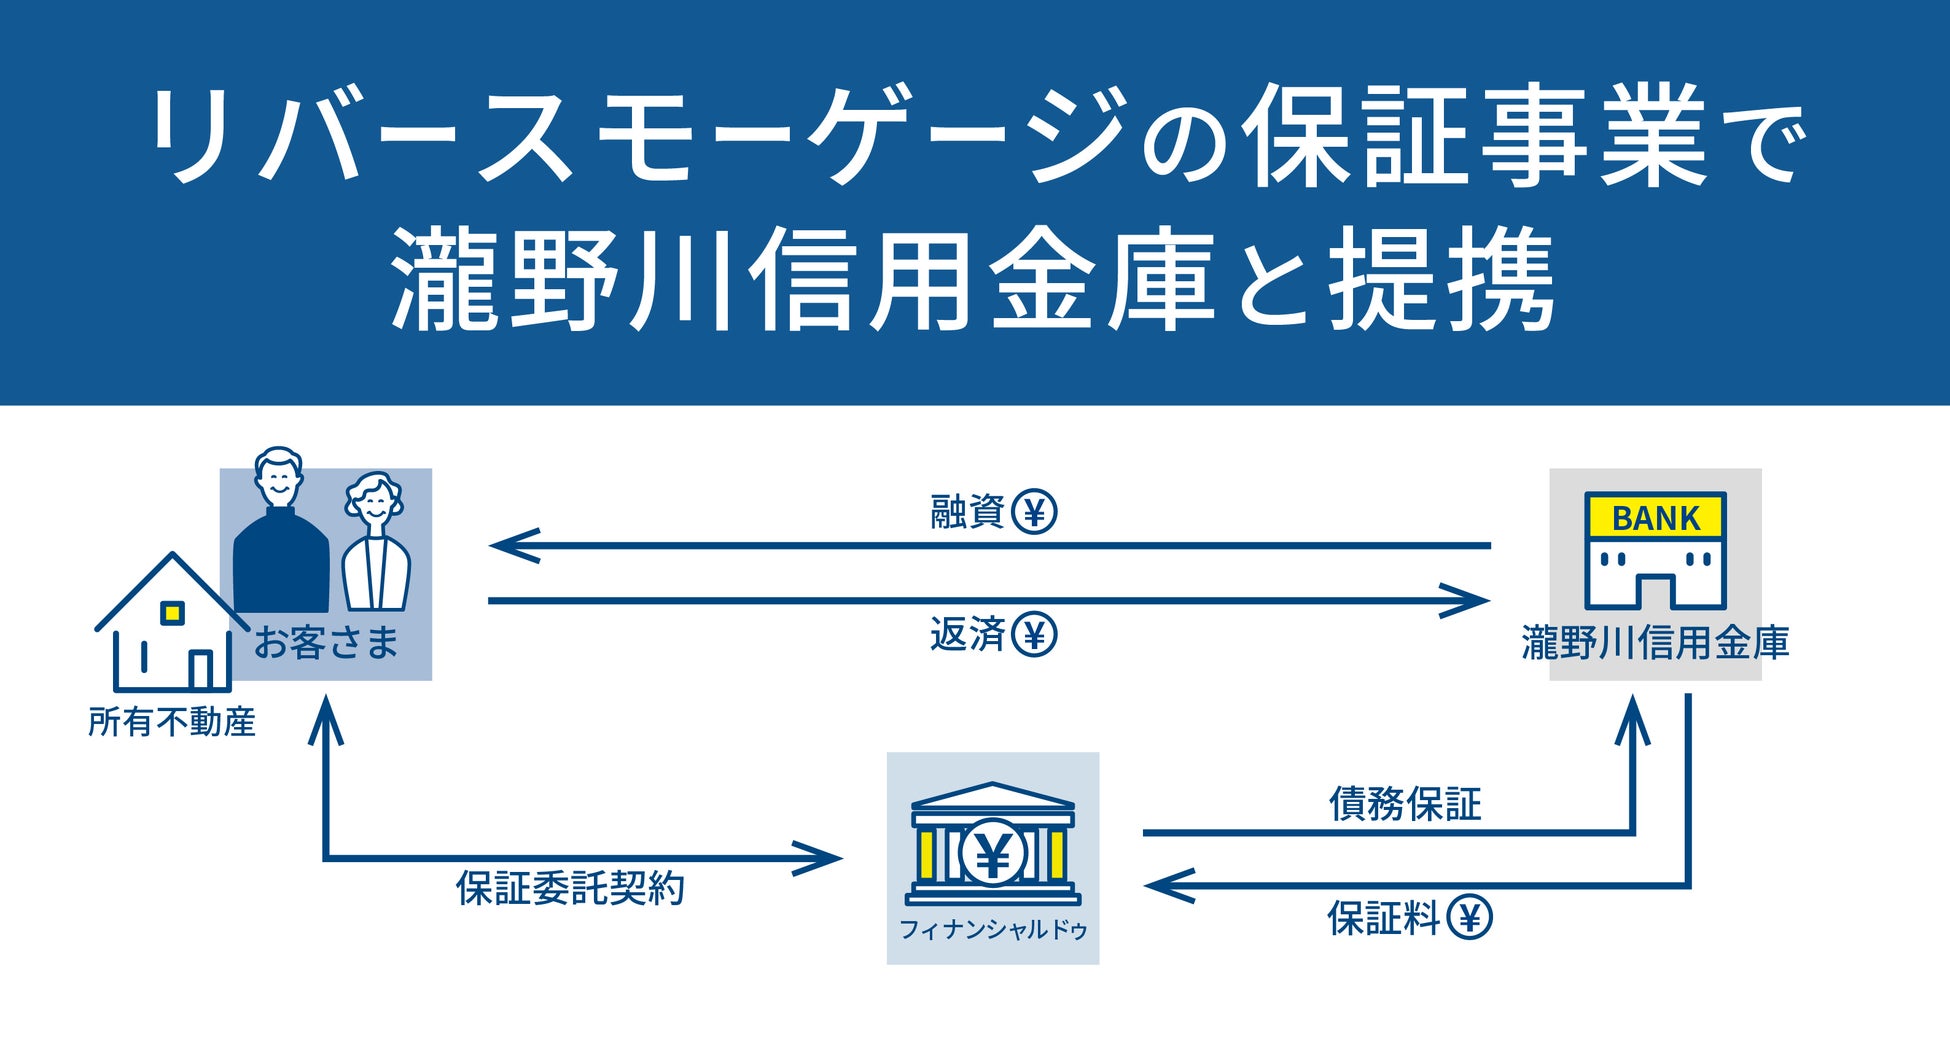 「NISA & MATSUI Bankデビュー応援キャンペーン」開催新規口座開設等で1,500円分の松井証券ポイントをプレゼント